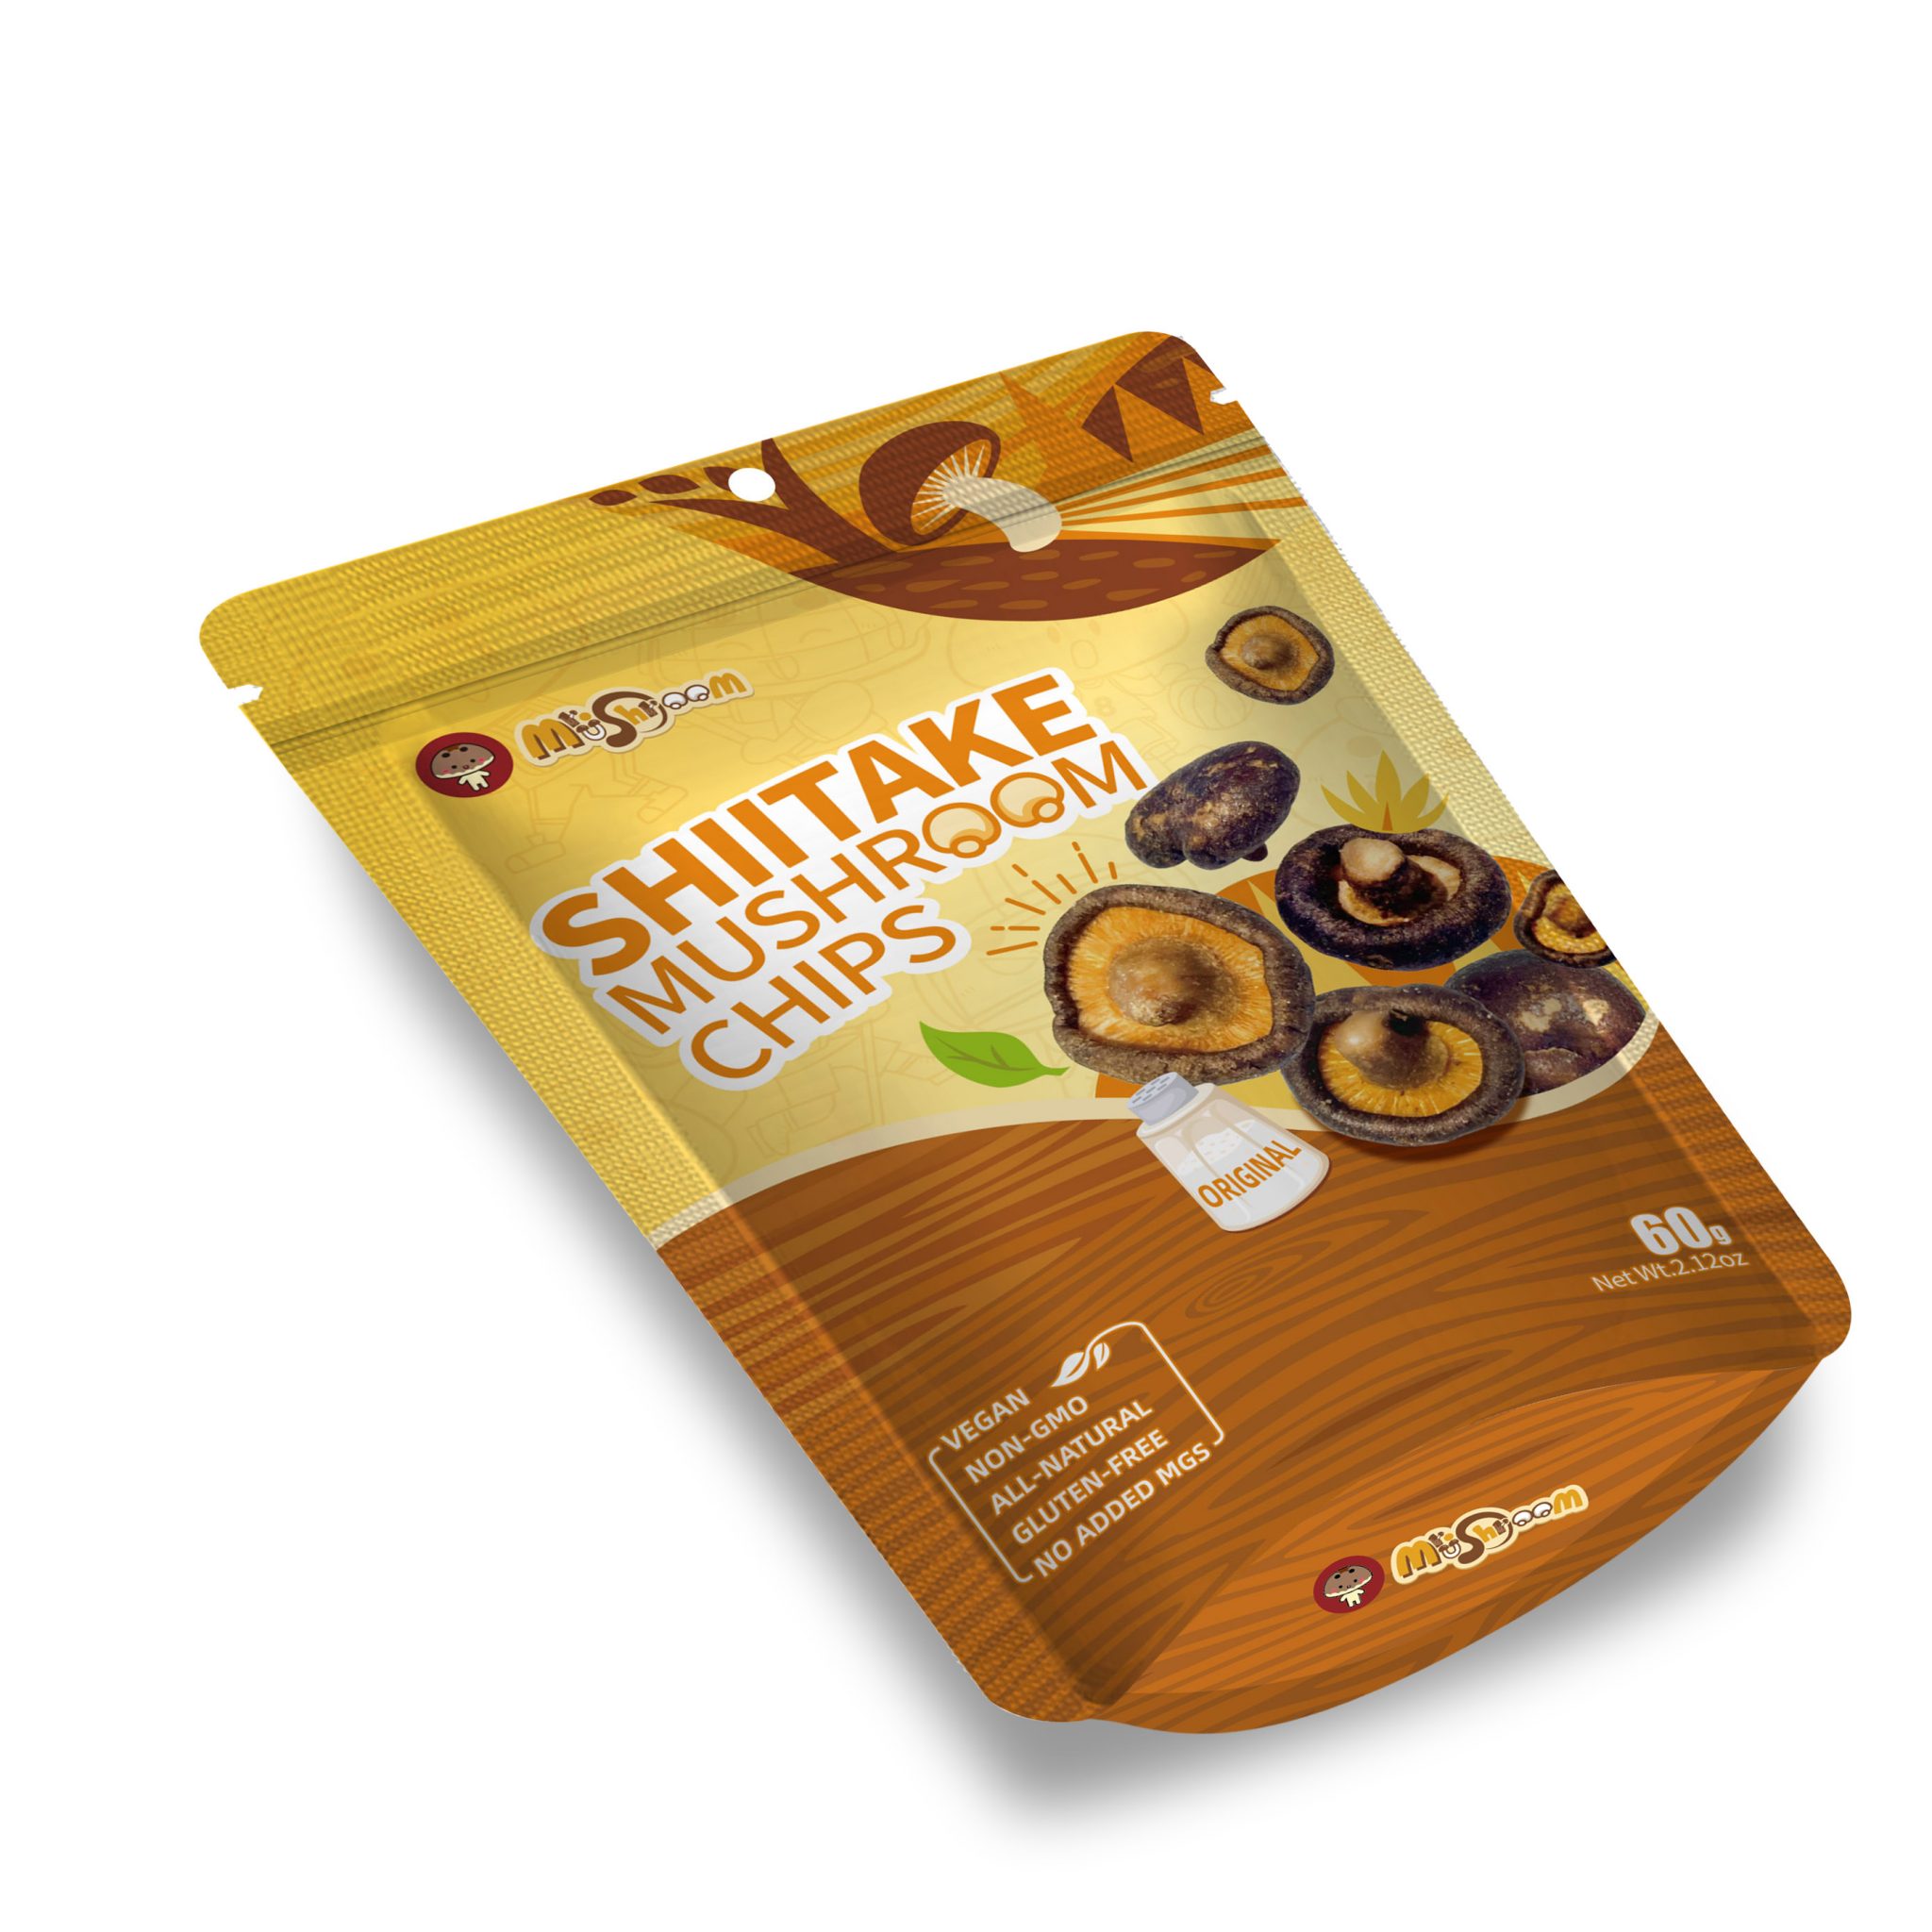 Shiitake Mushroom Chips Original